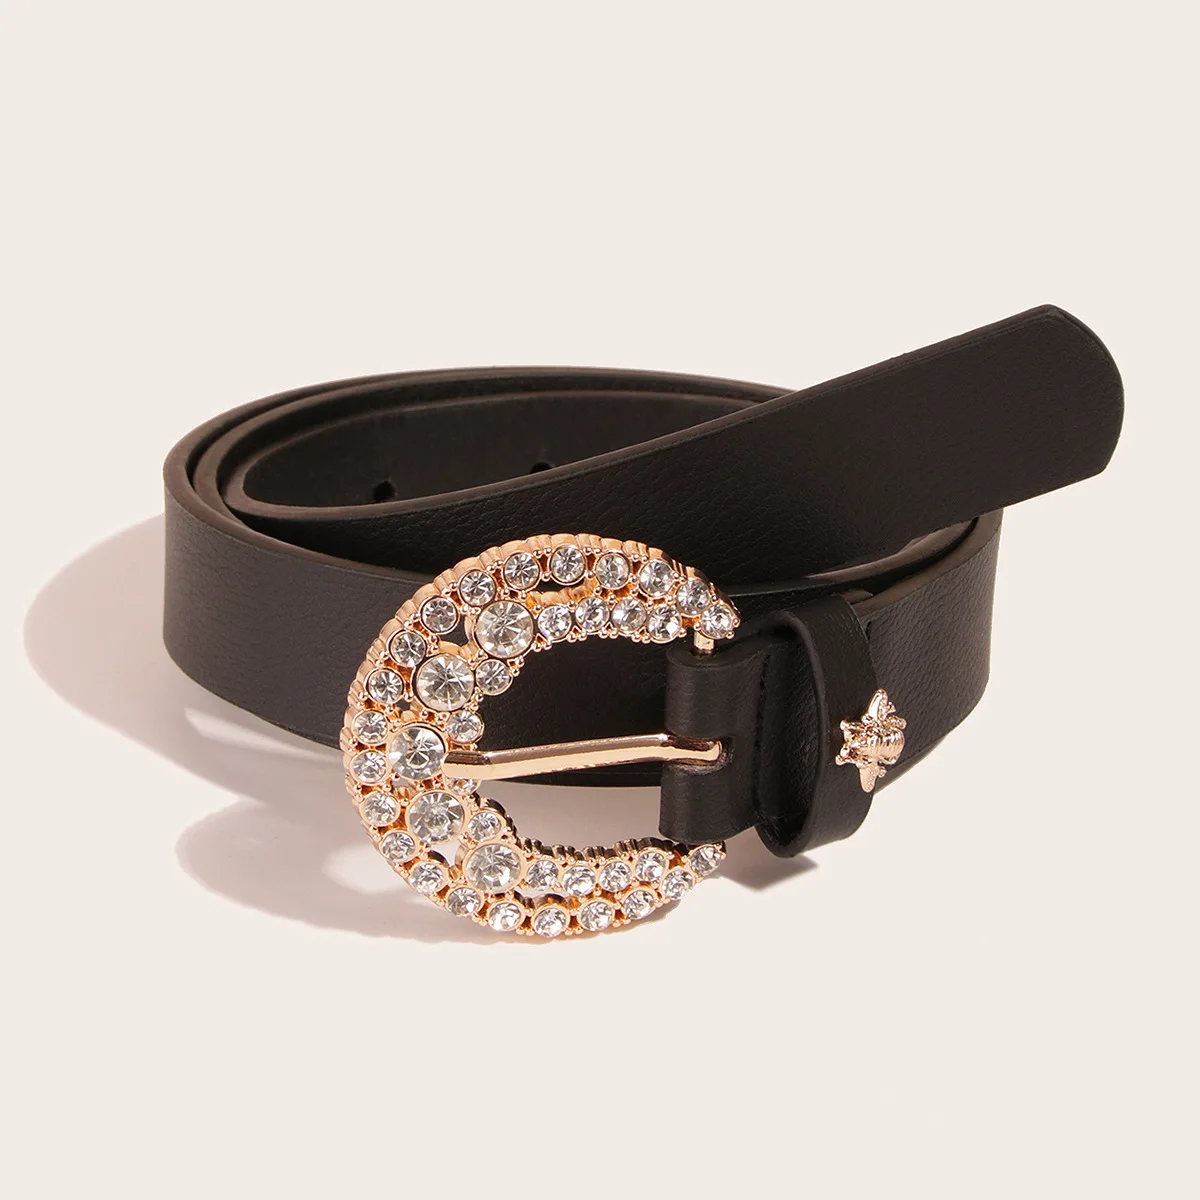 Fashion women's Genuine leather belt mosaic gem turquoise belts metal buckle pattern retro  decorative belt gift BY15